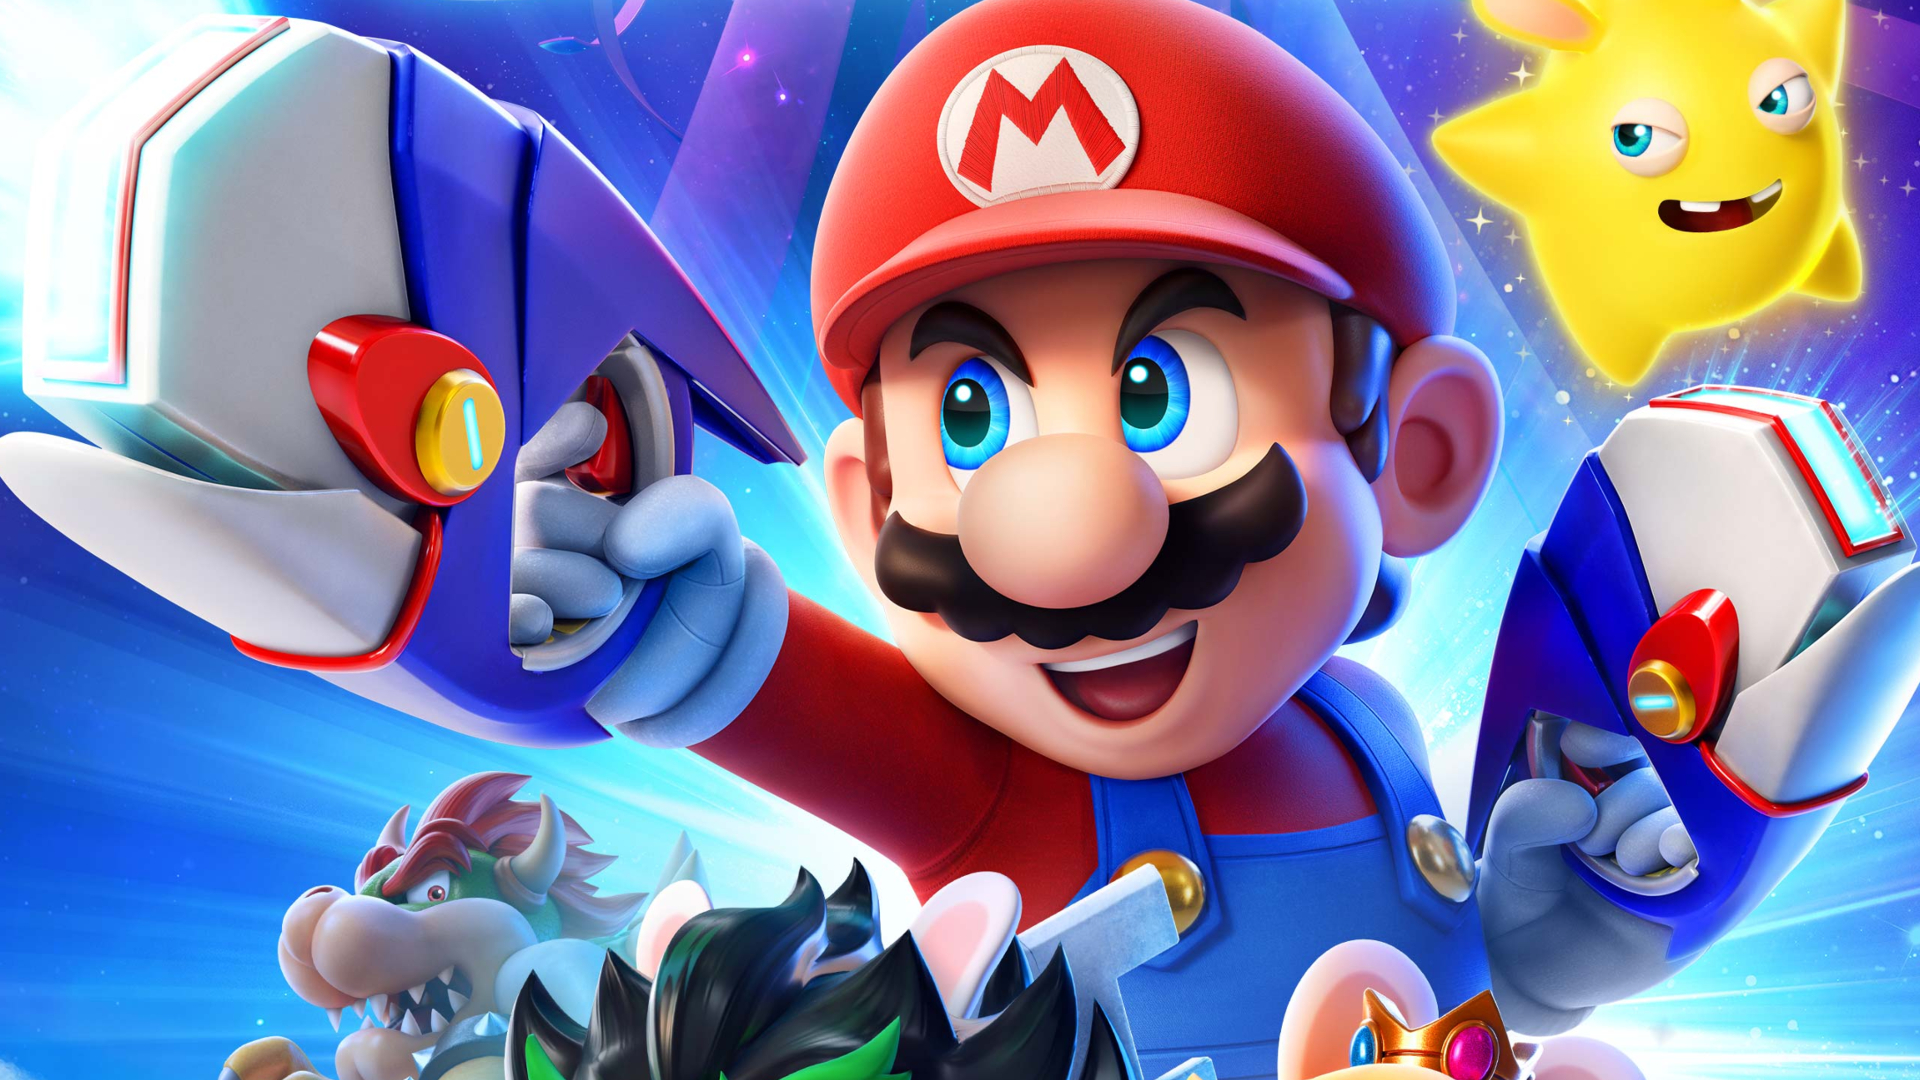 Upcoming video game movies - Mario